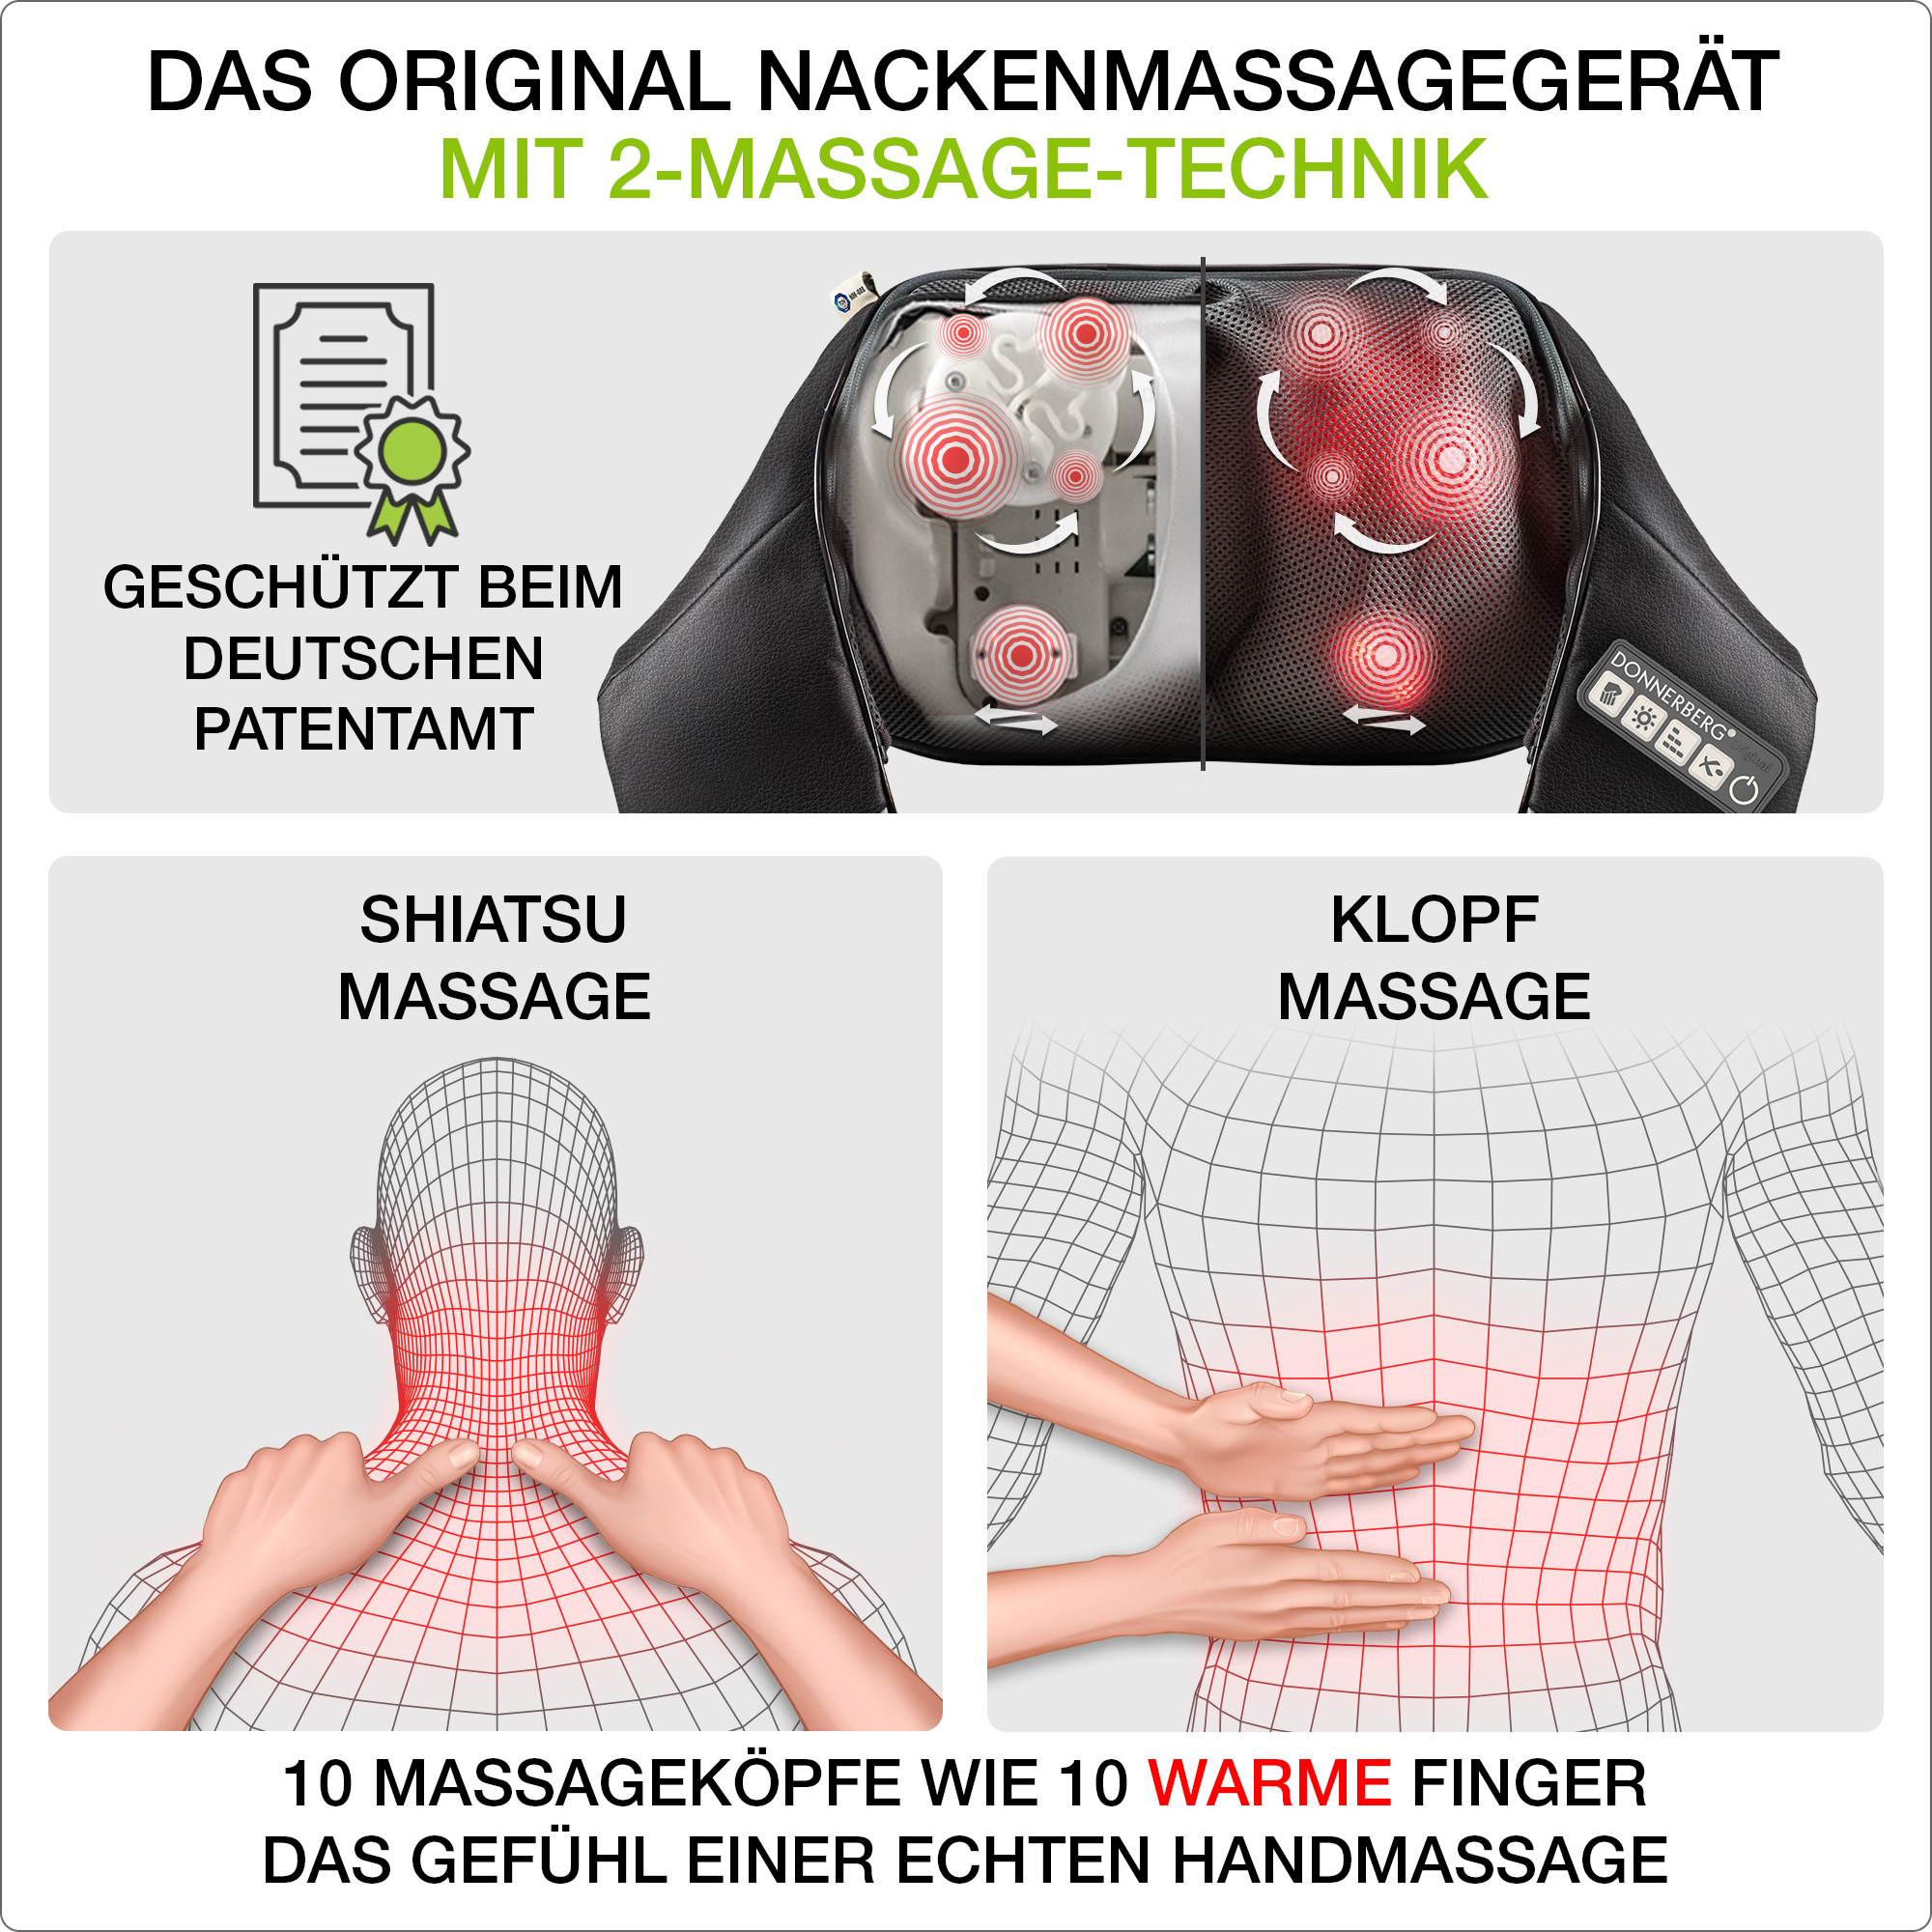 DONNERBERG Klopfmassagefunktion Massage Klopfmassage 4D Massagegerät Shiatsu mit Nackenmassagegerät